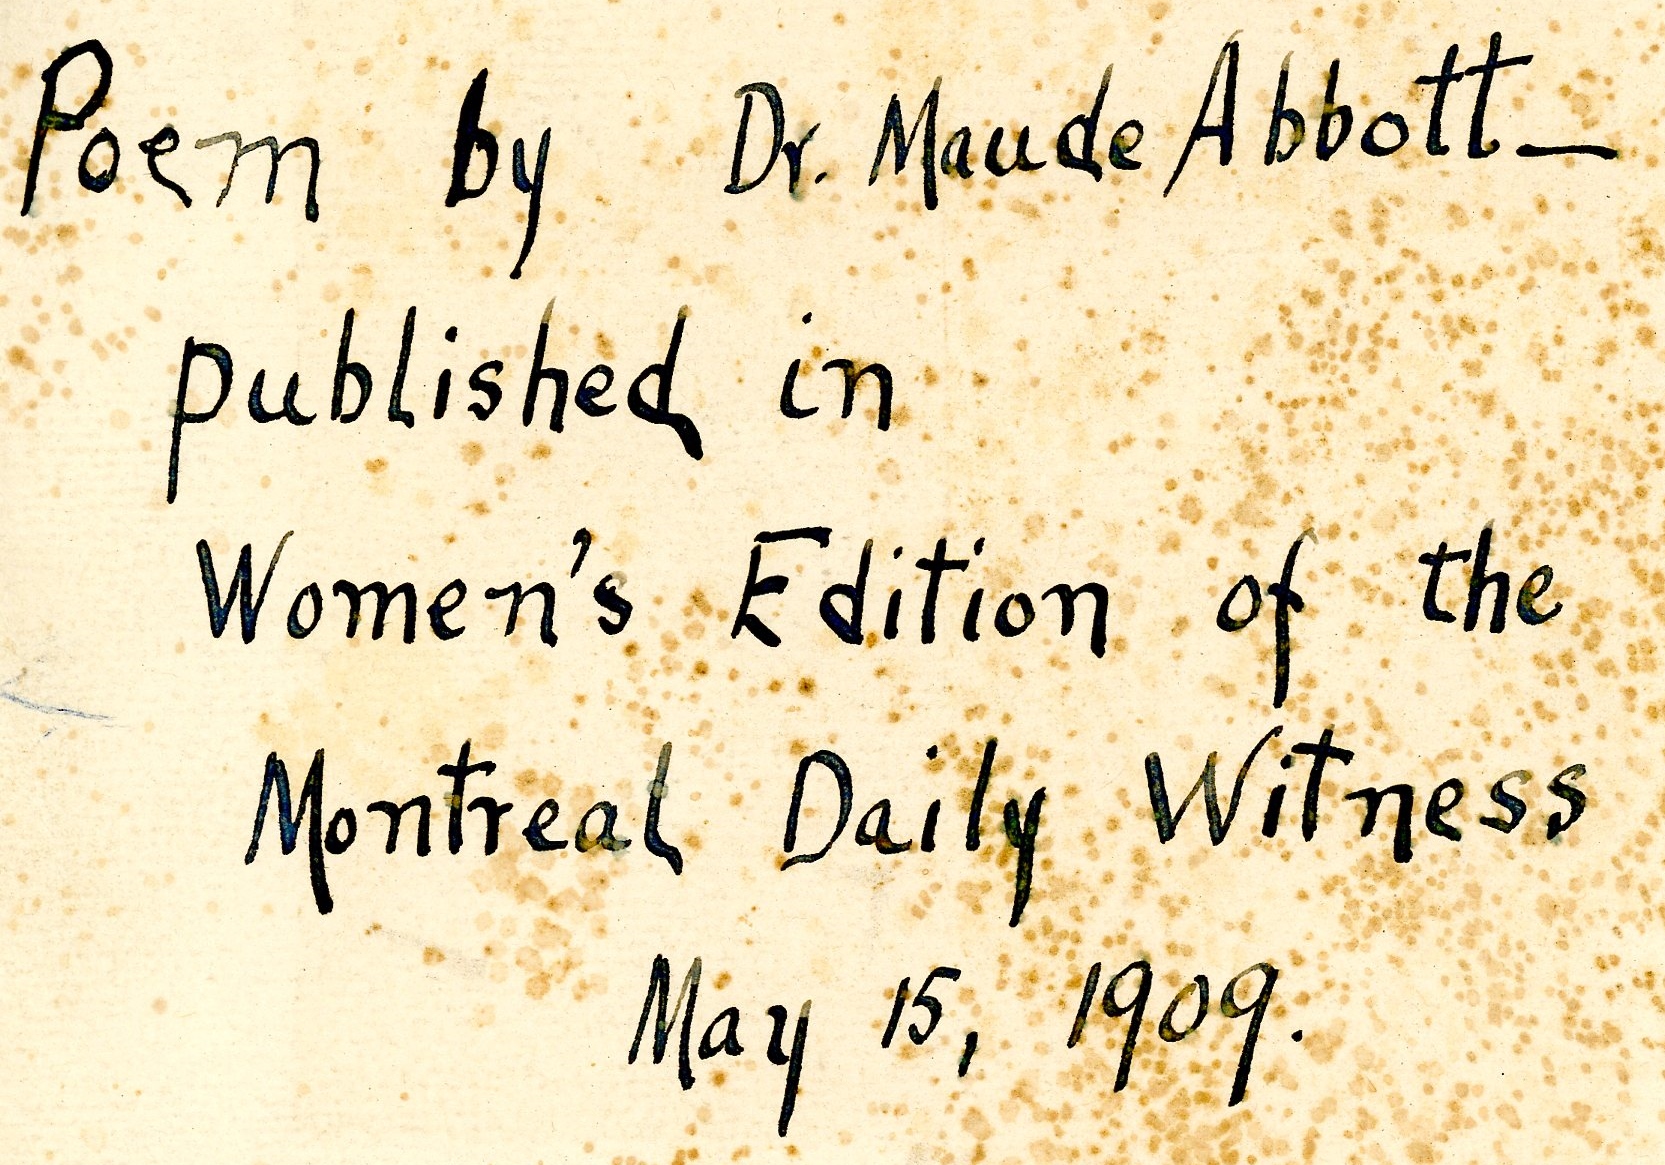 Note écrite à l’encre noire sur papier sépia. On y lit : « Poem by Dr. Maude Abbott – published in Women’s Edition of the Montreal Daily Witness May 15, 1909 ».